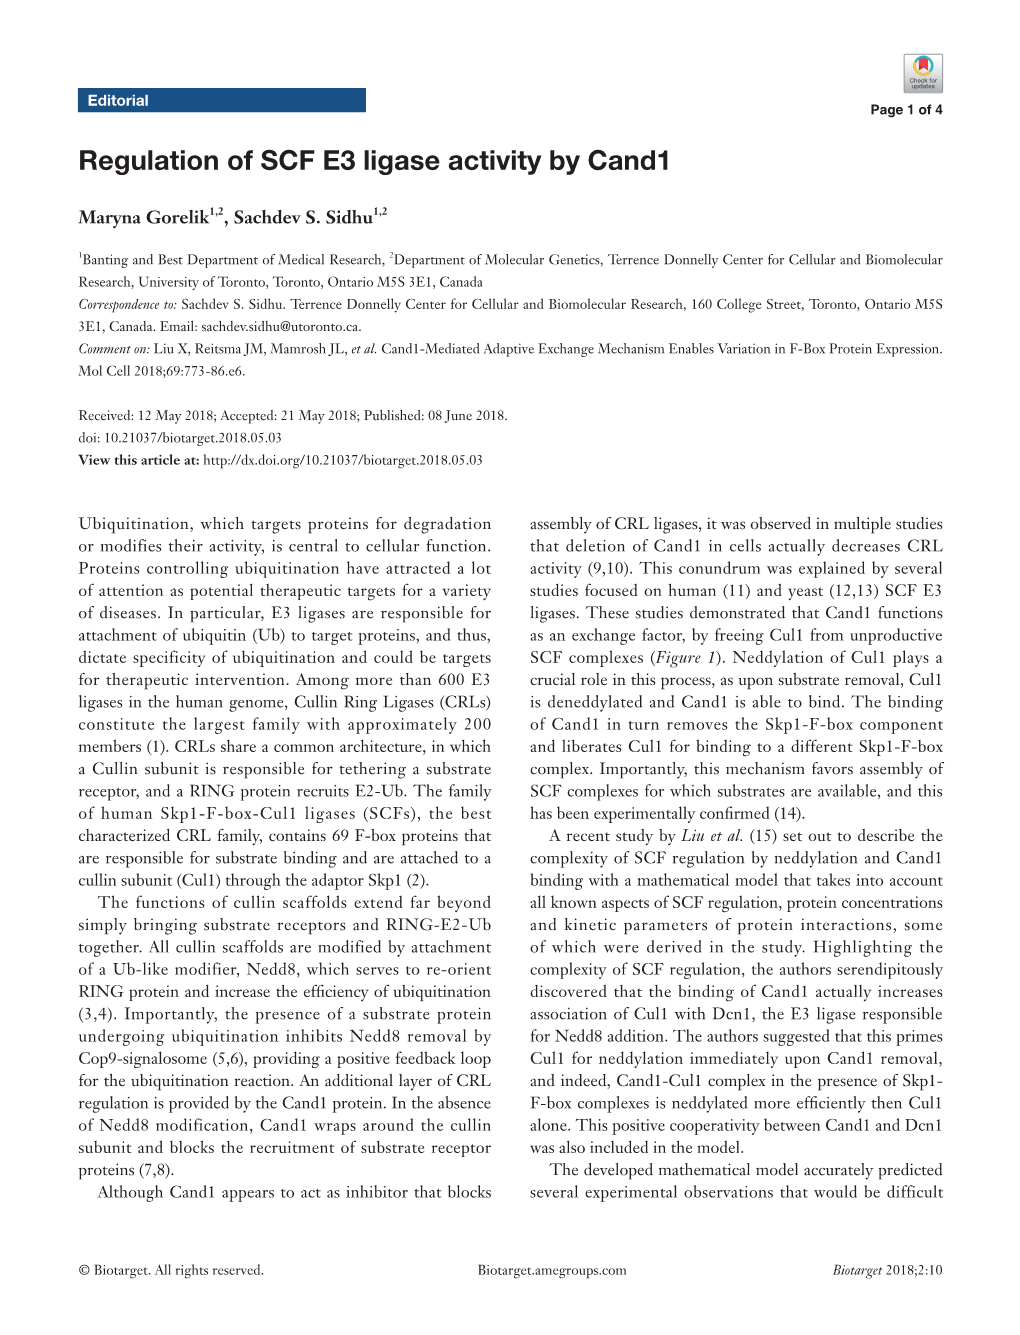 Regulation of SCF E3 Ligase Activity by Cand1